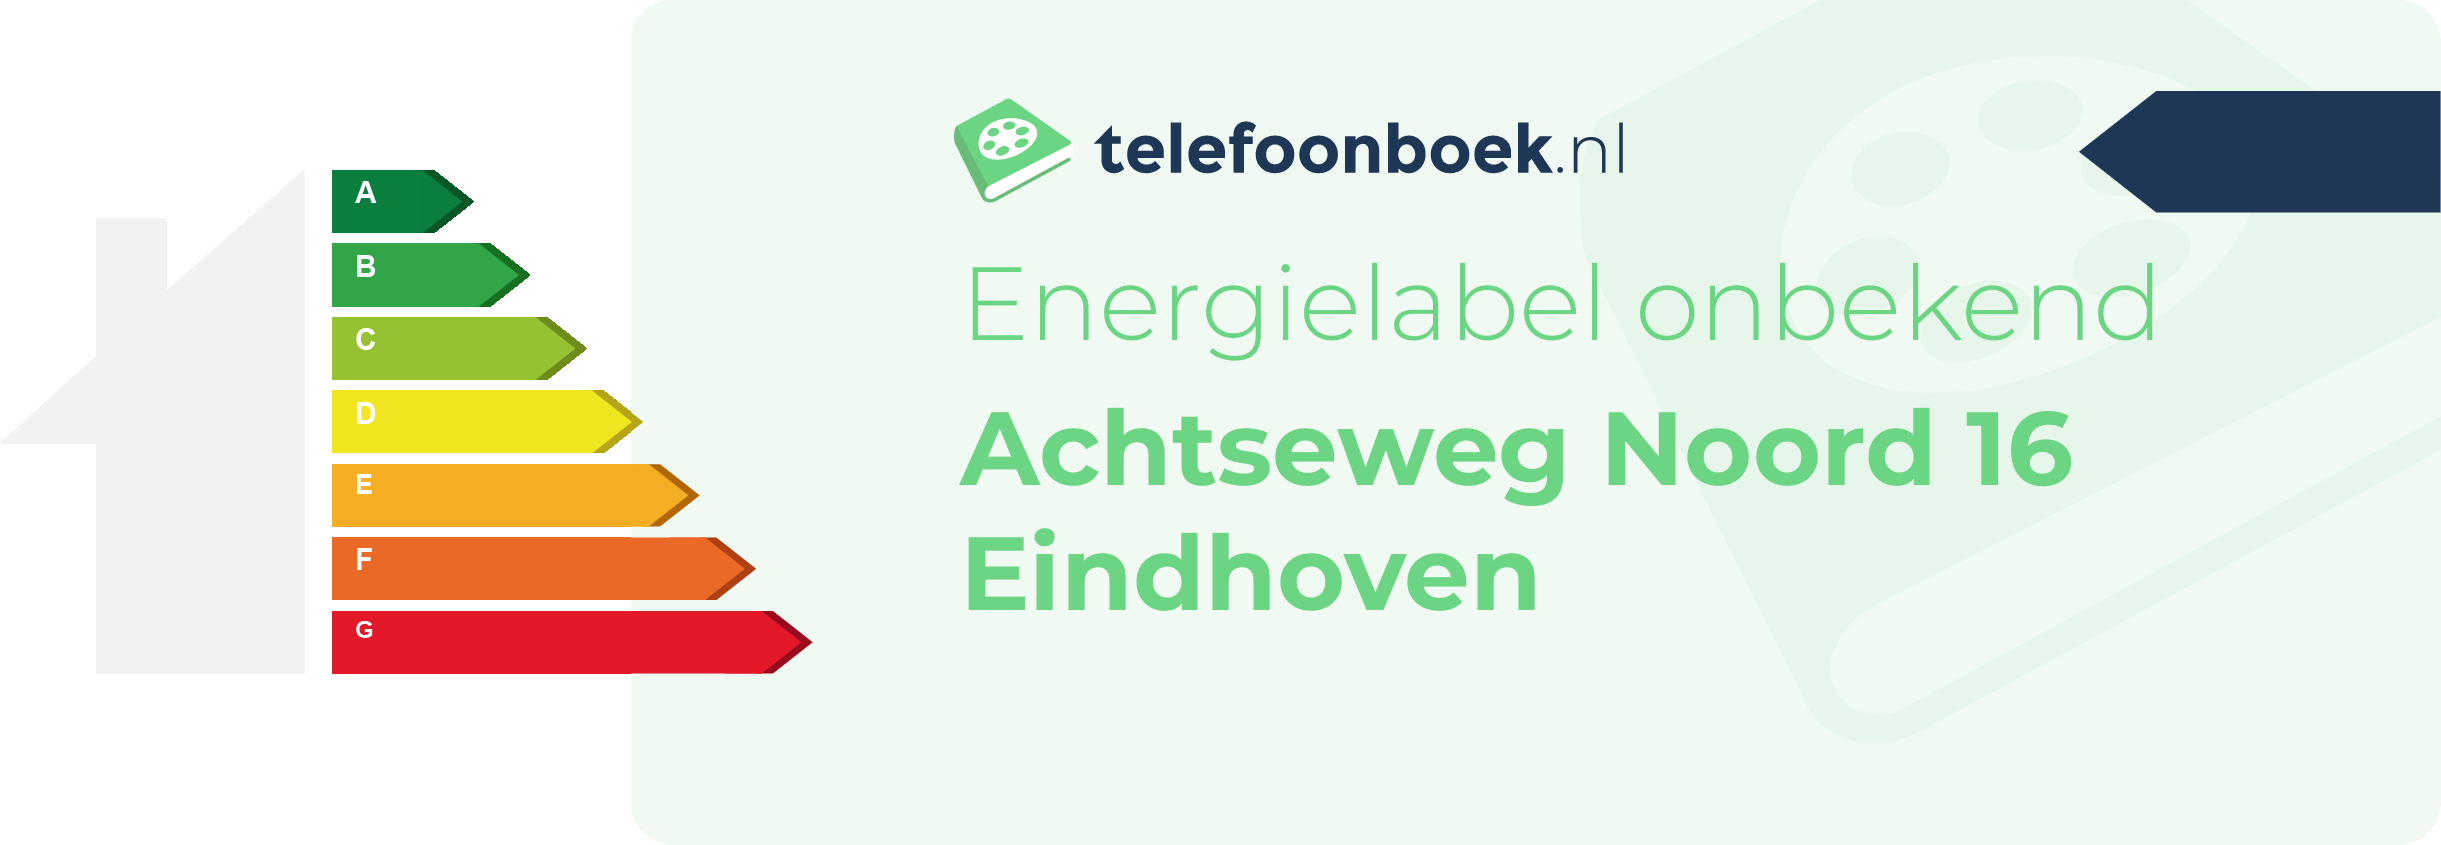 Energielabel Achtseweg Noord 16 Eindhoven